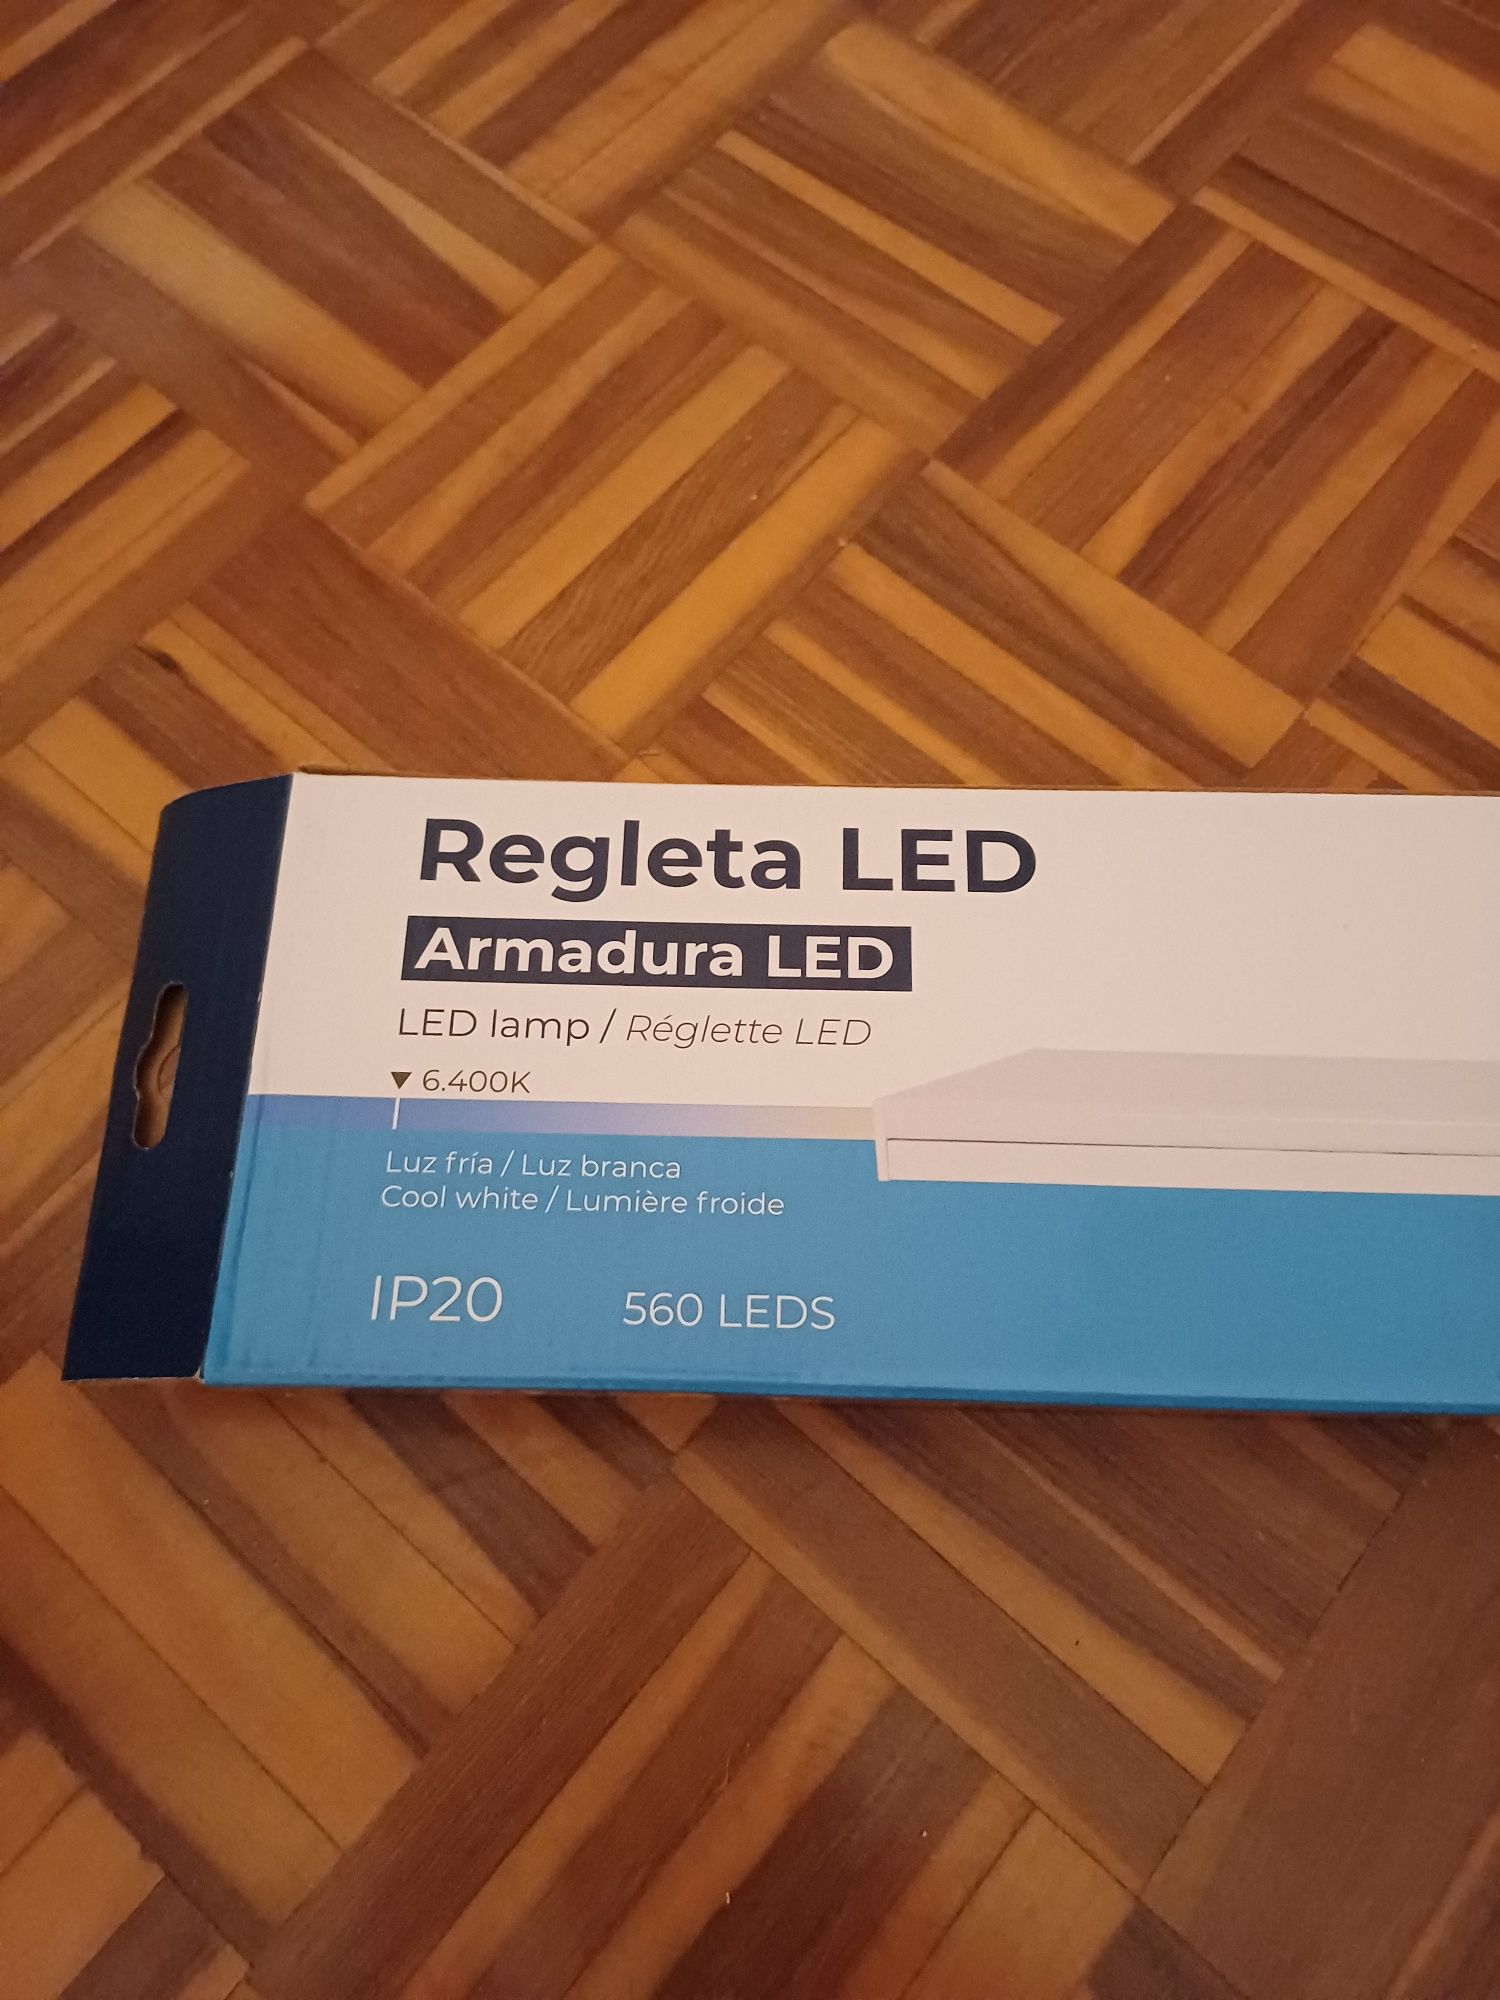 Armadura/ Regleta LED 6.400k 48W 560 LEDS